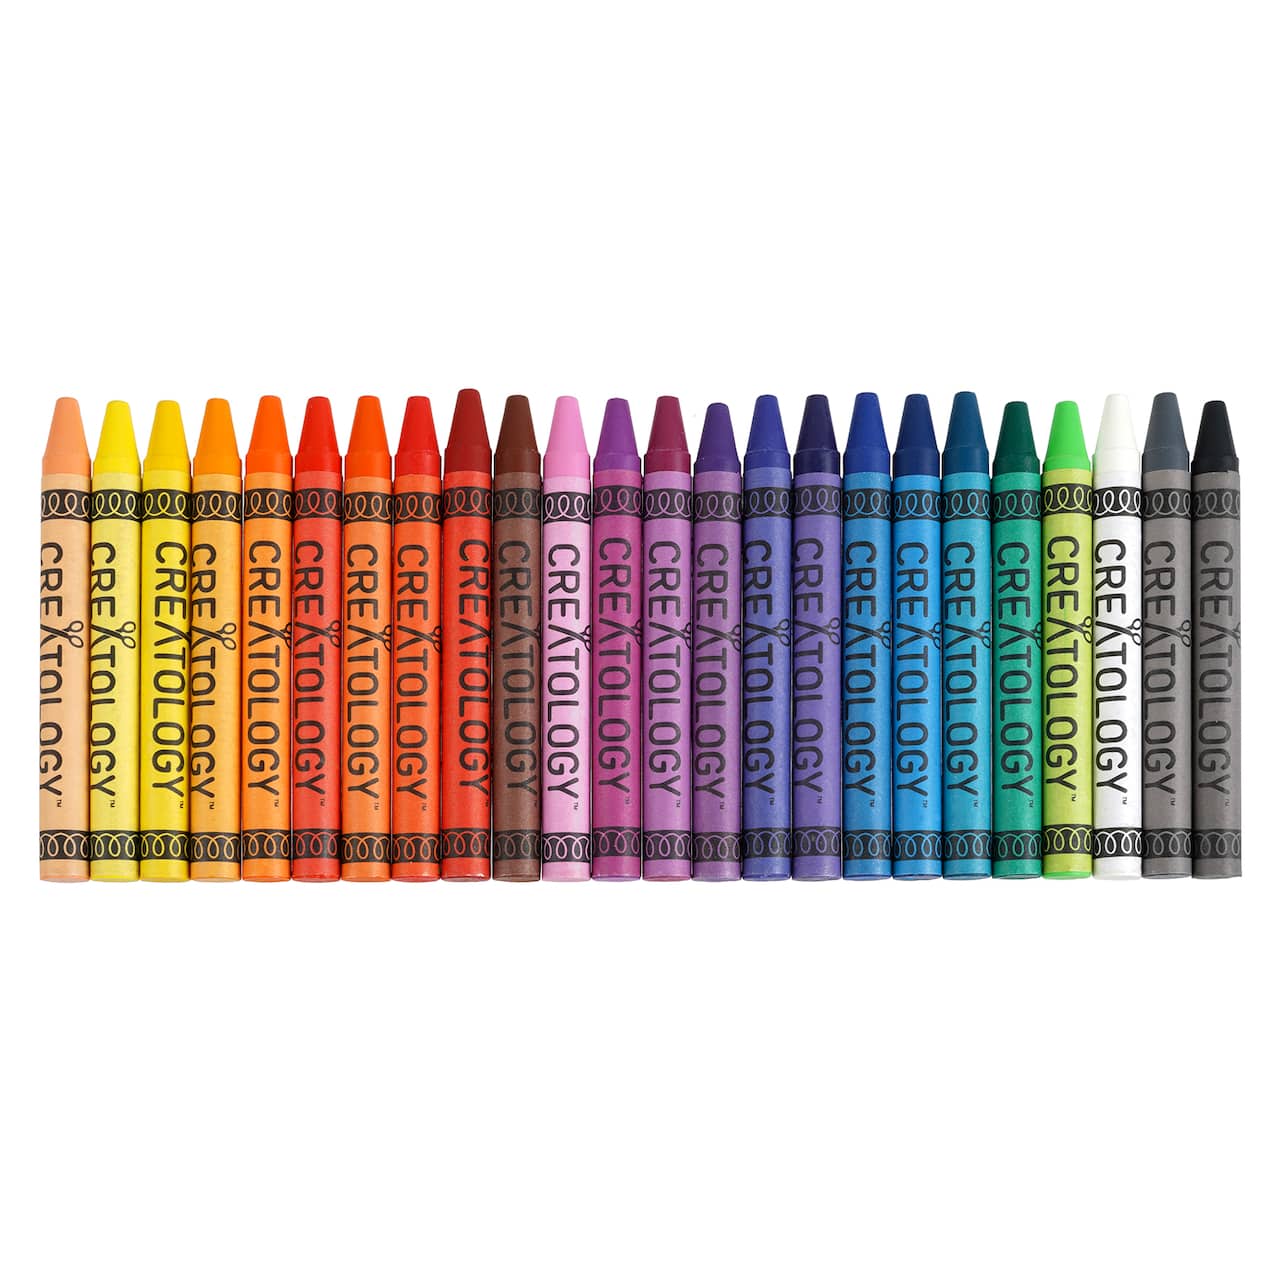 Crayons, 24ct. by Creatology&#x2122;